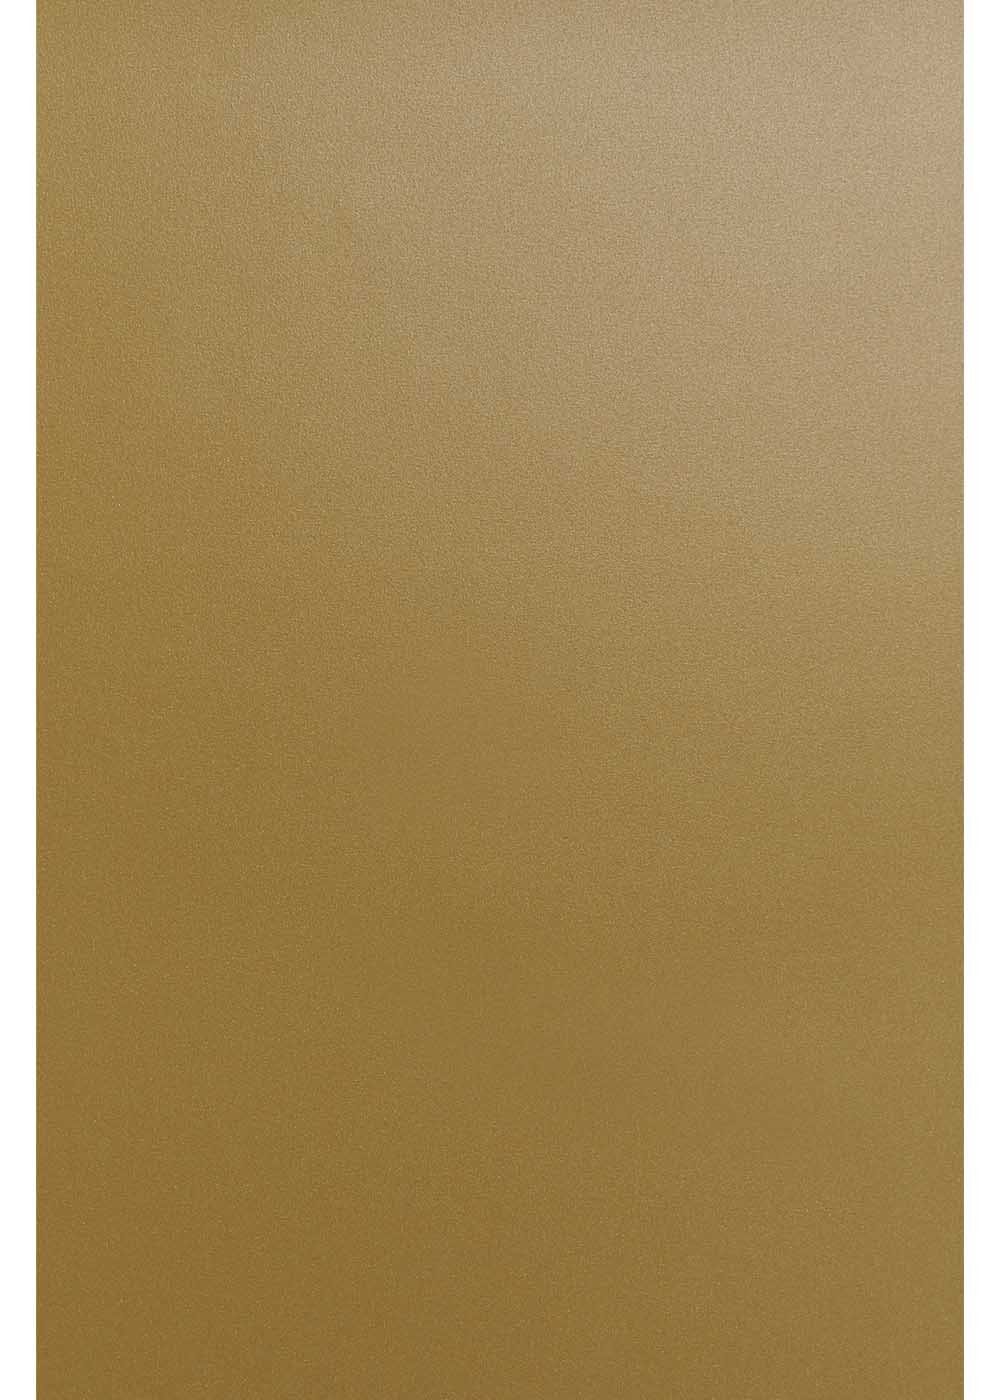 30x20 Transferfolie, cm mehrfarbig, Hilltop Transparentpapier Textilfolie, Gold Reflektierende